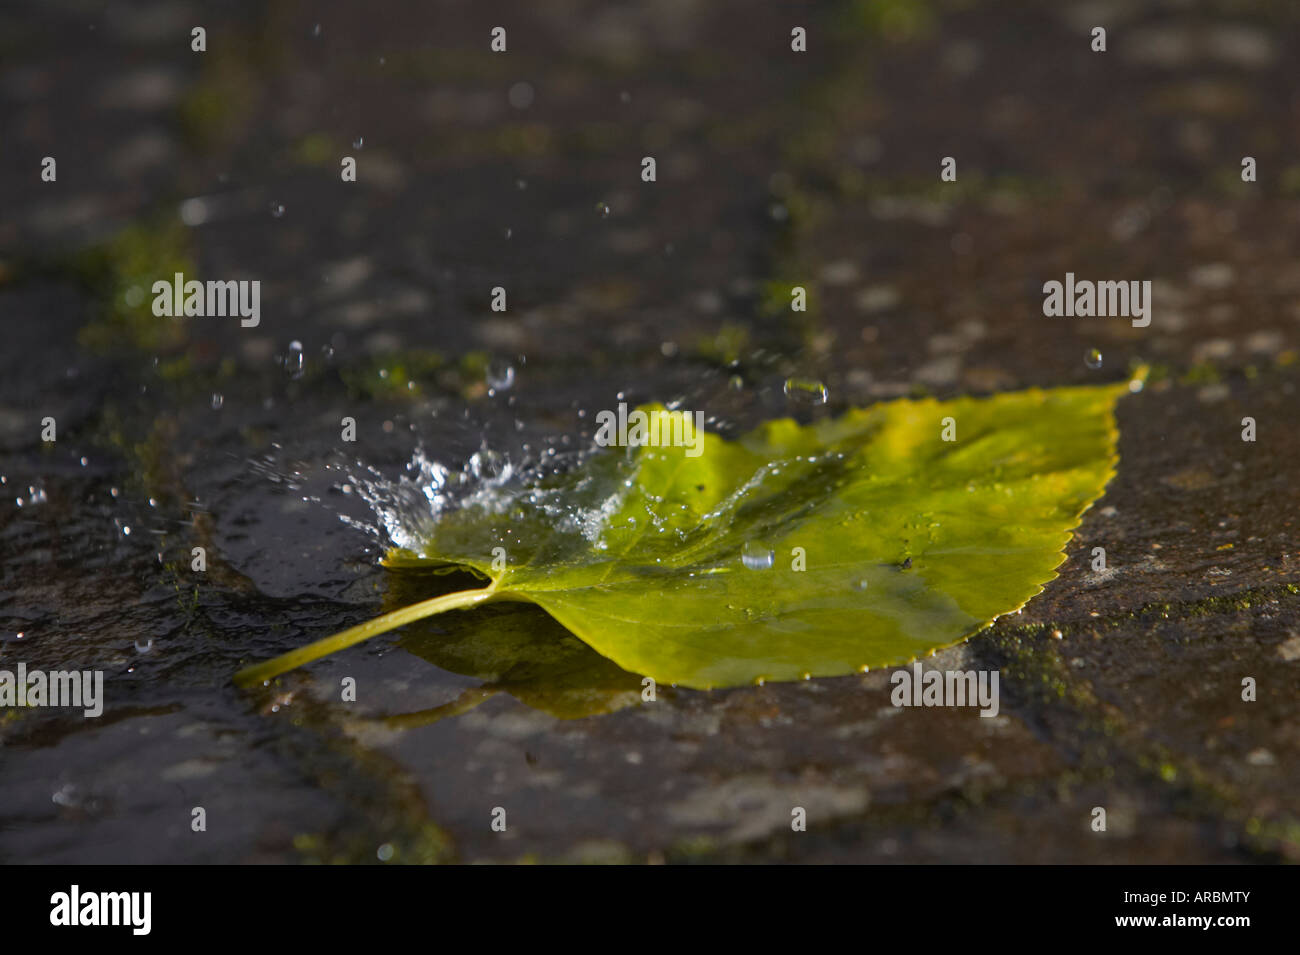 Raindrops fall on a green leaf. Stock Photo